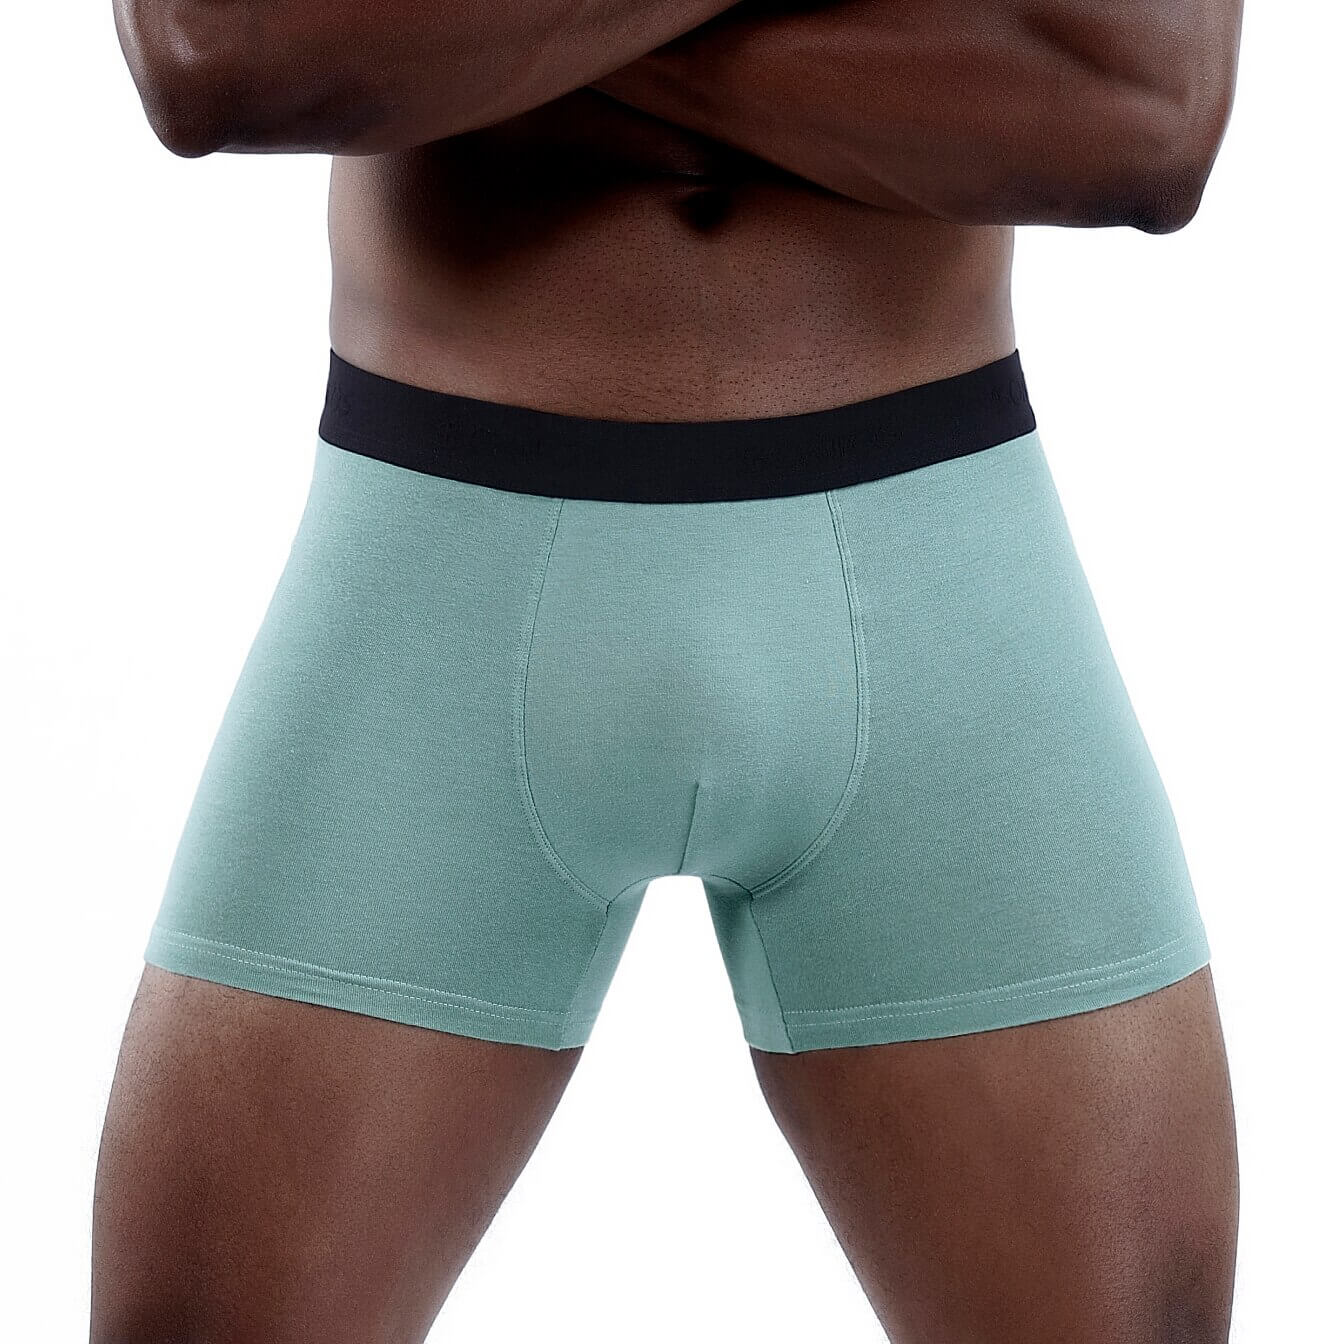 Men's Cotton Boxer Shorts / Sexy Male Fashion Underwear - SF1094